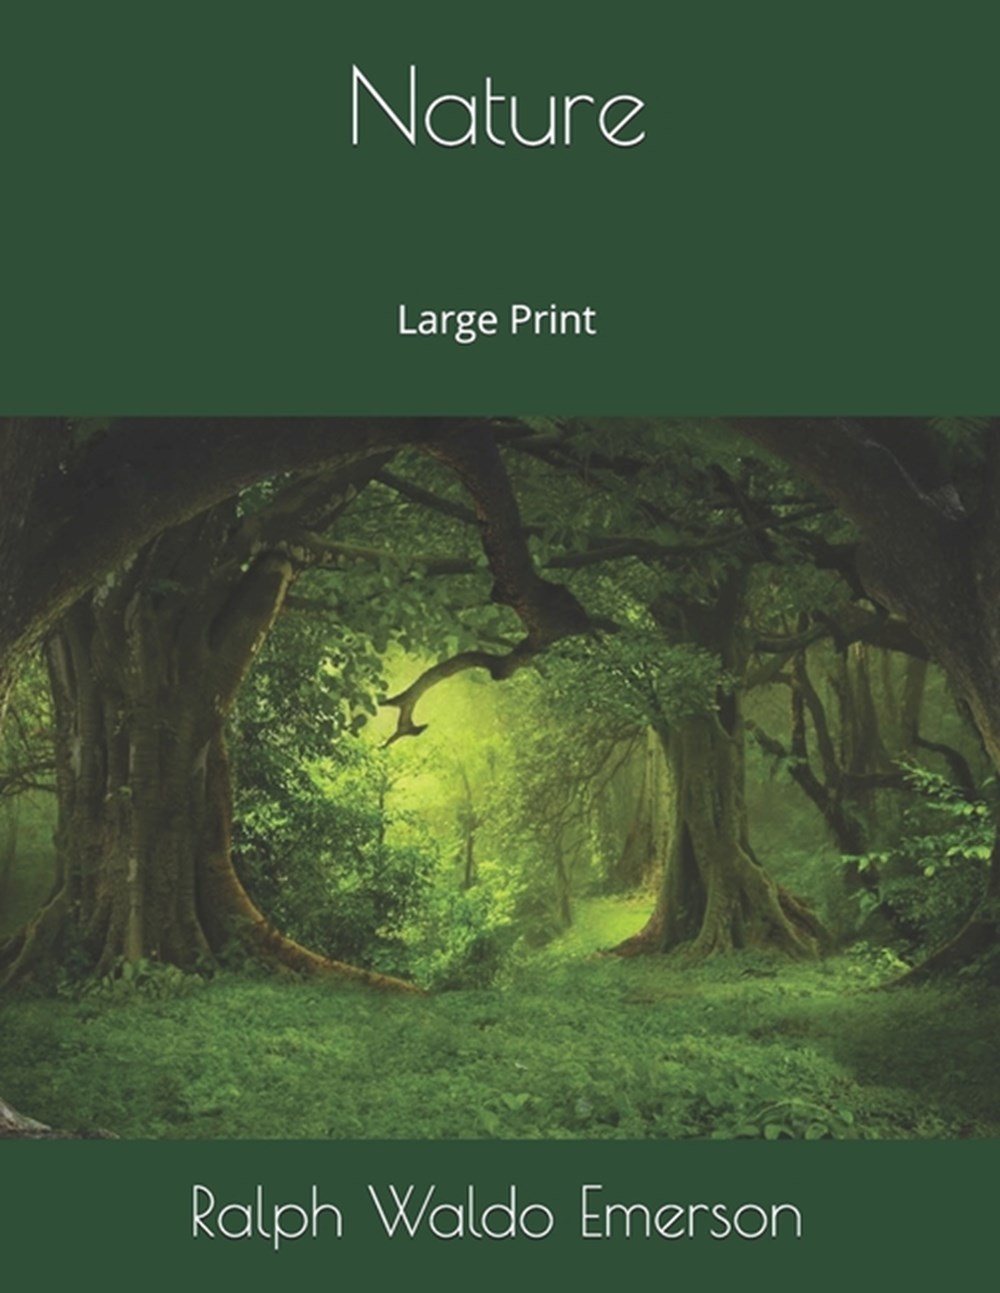 Nature Large Print